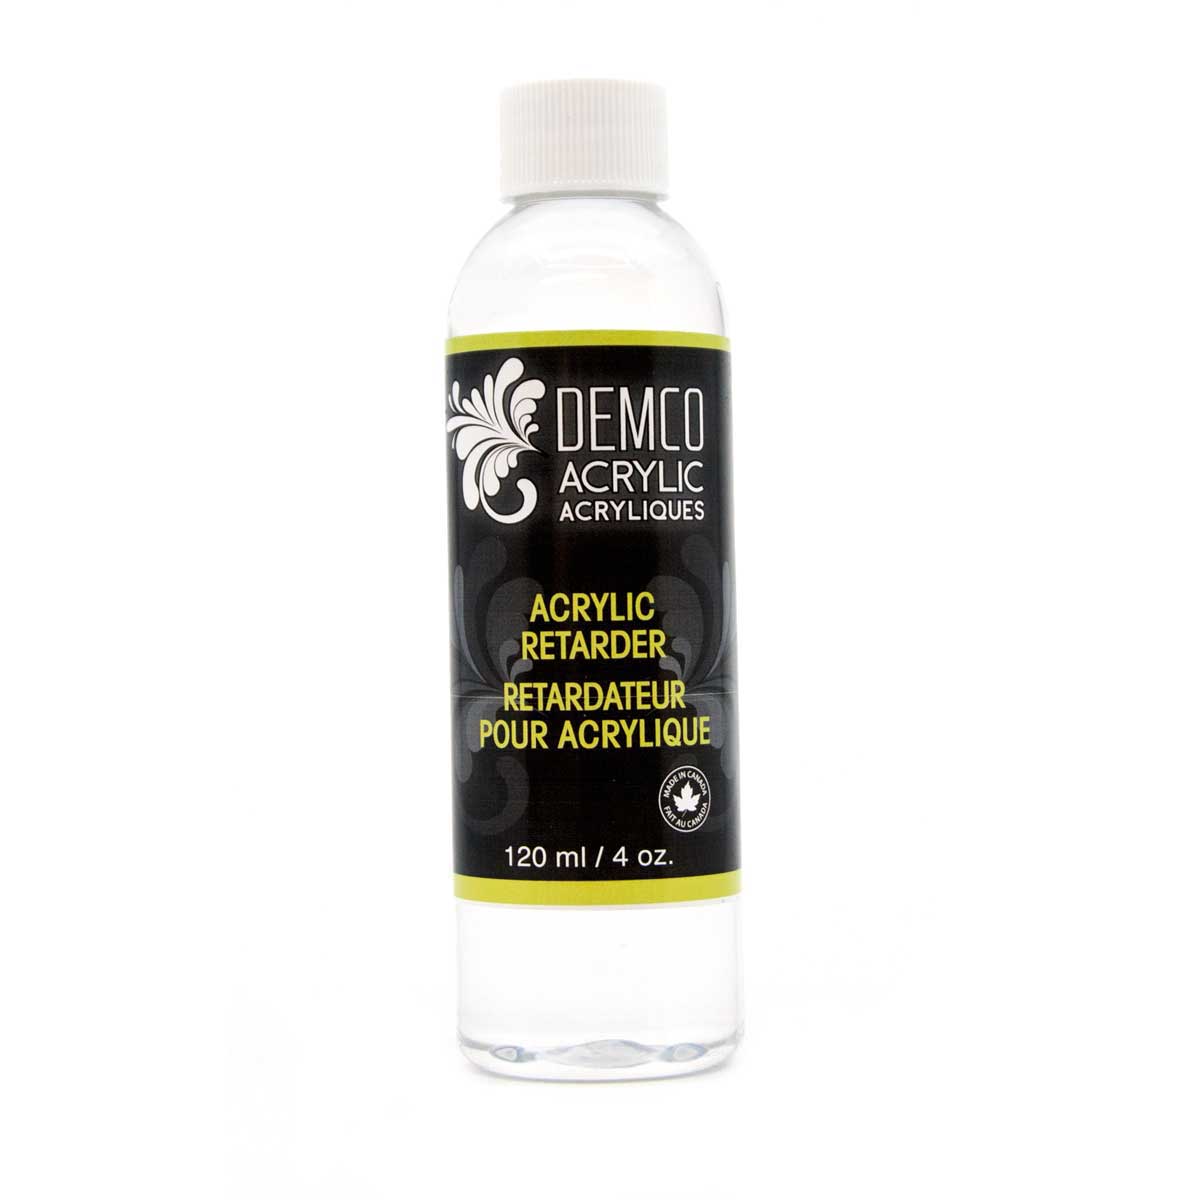 Demco Acrylic Retarder 120 ml